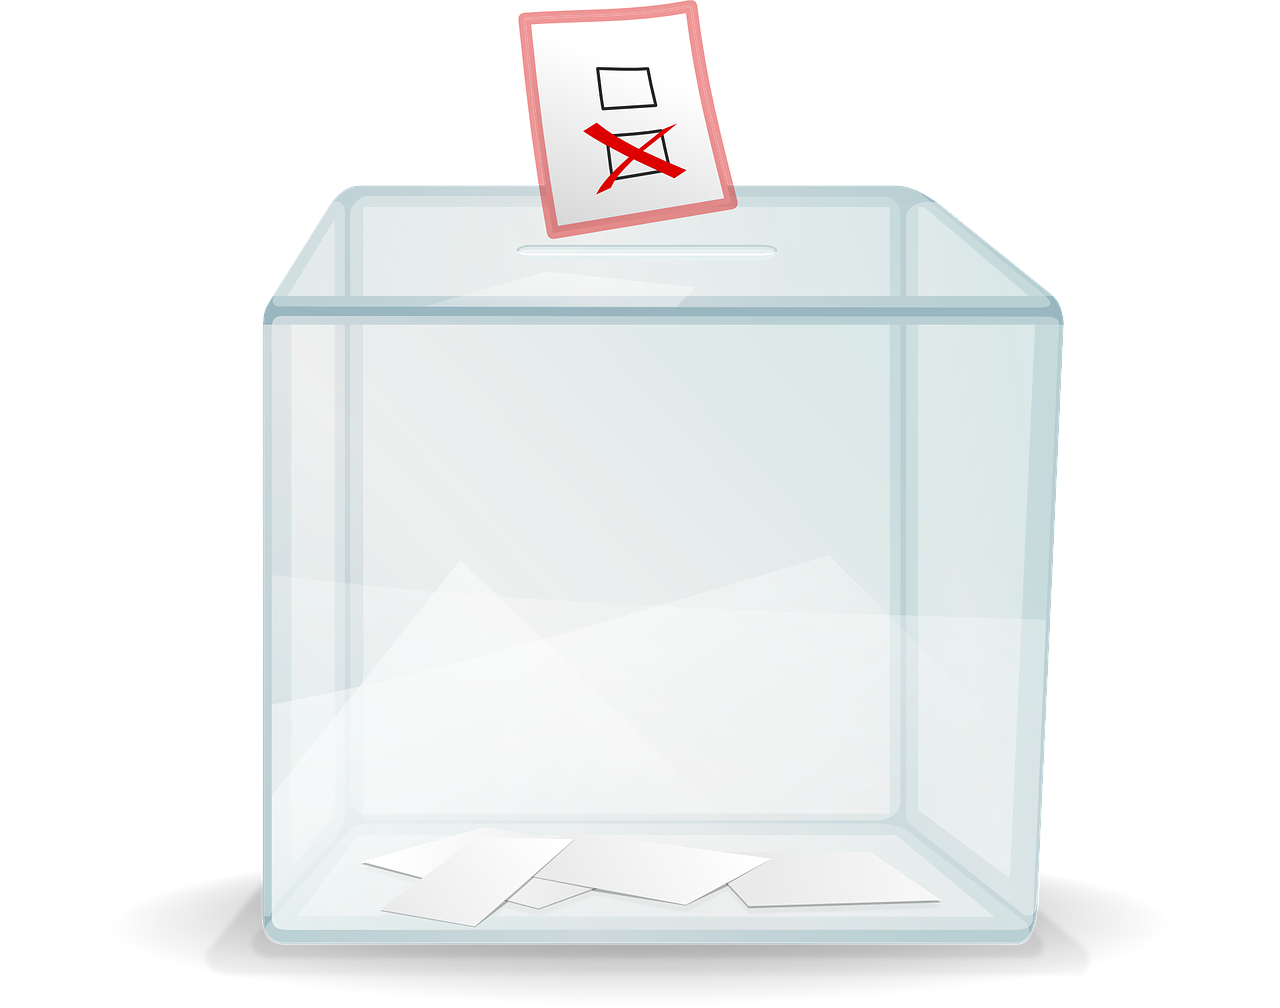 ballot-box-gac771bc9d_1280-2.png